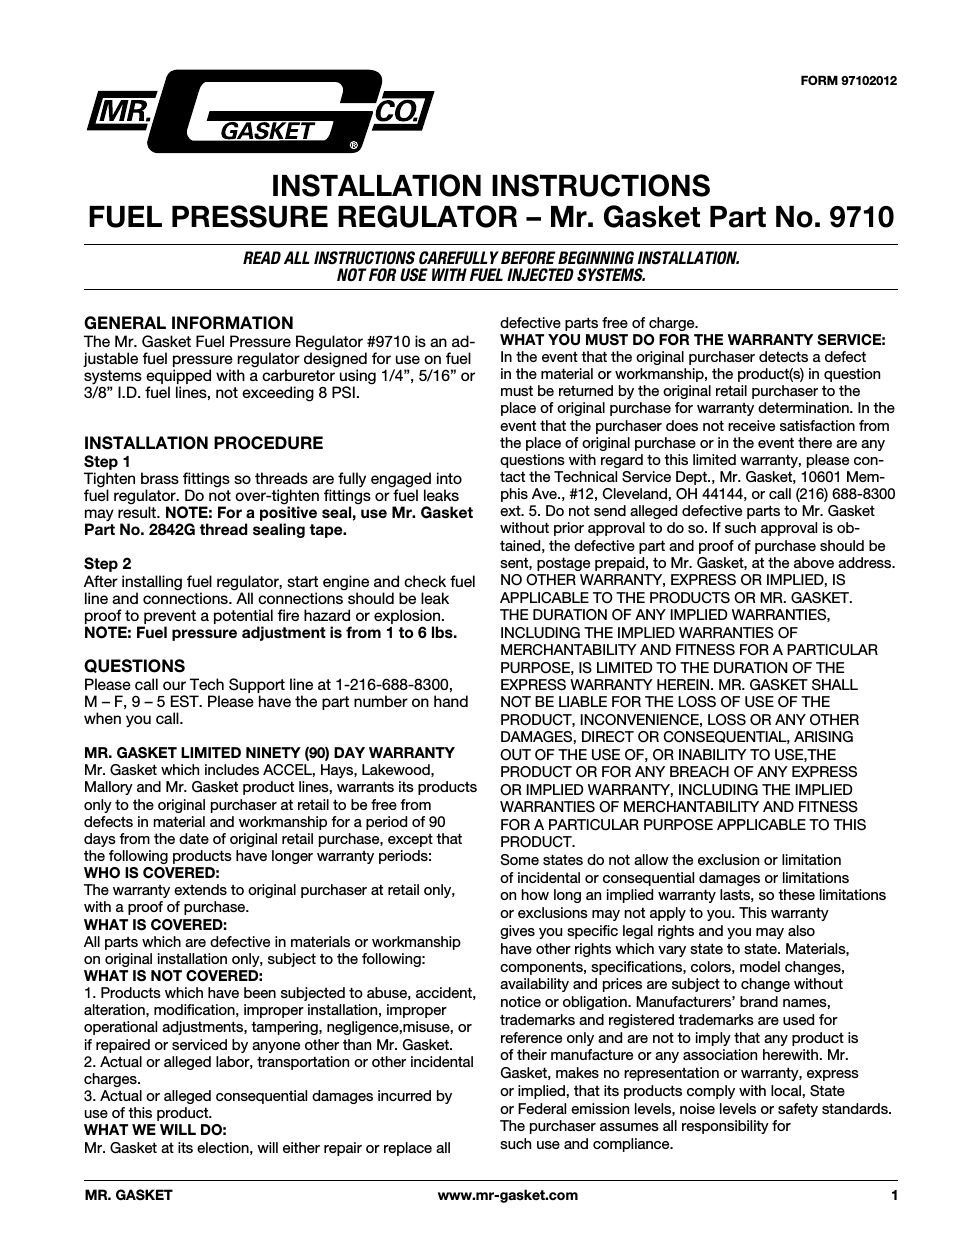 9710 Fuel Pressure Regulator: Adjustable